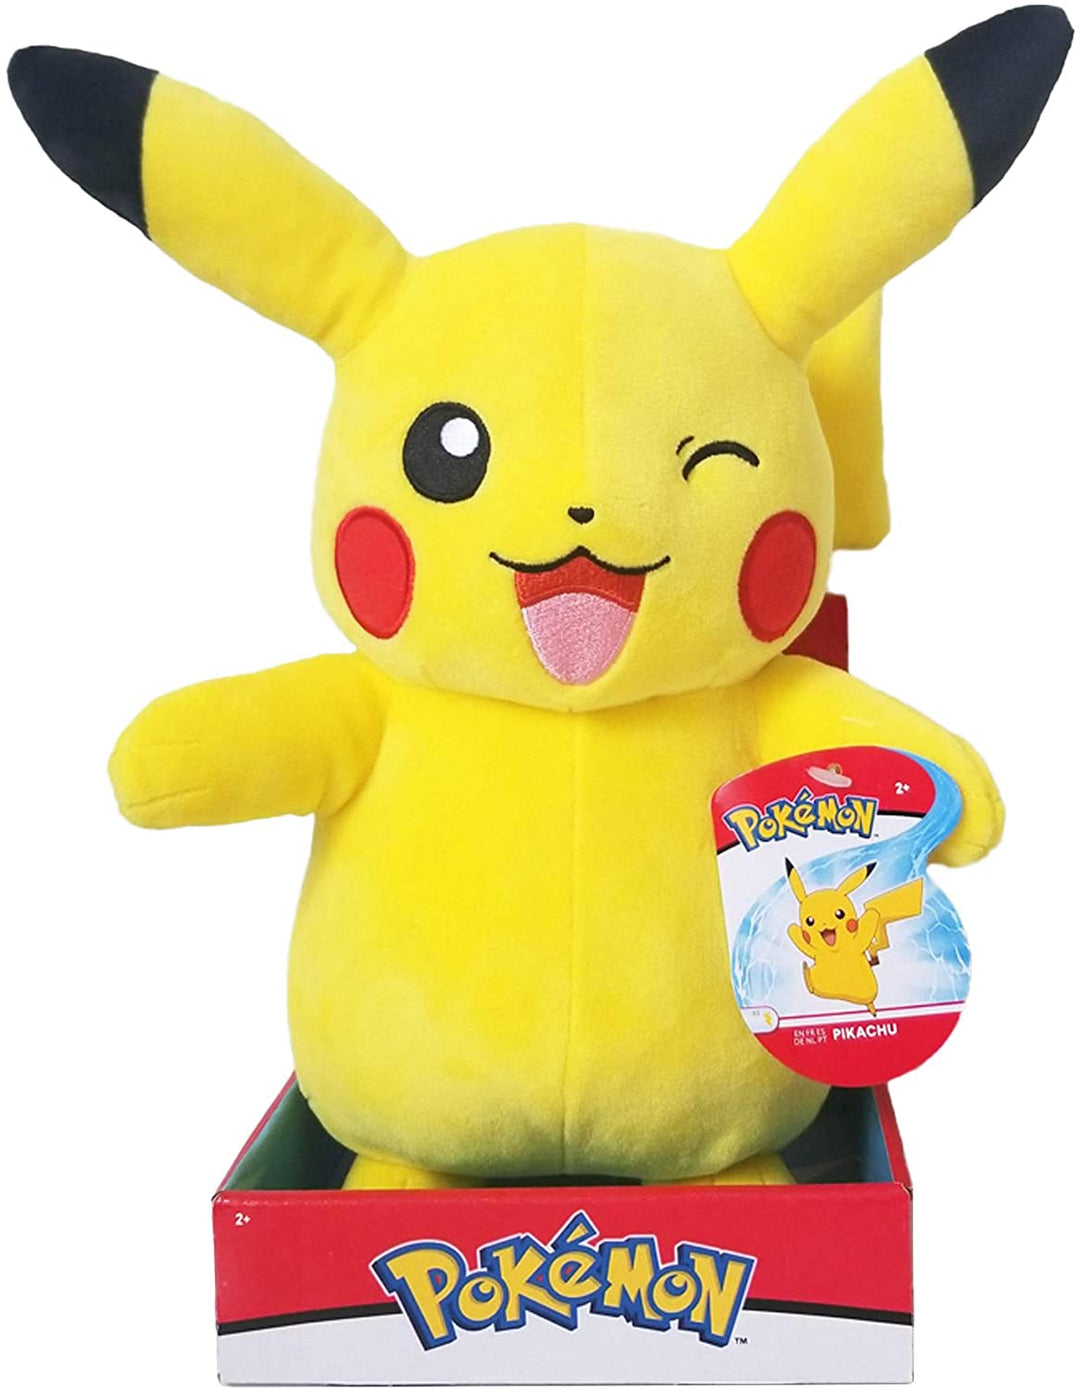 Pokemon - Figurines and Soft Toy - Pokemon Pikachu Soft Toy - 30 cm